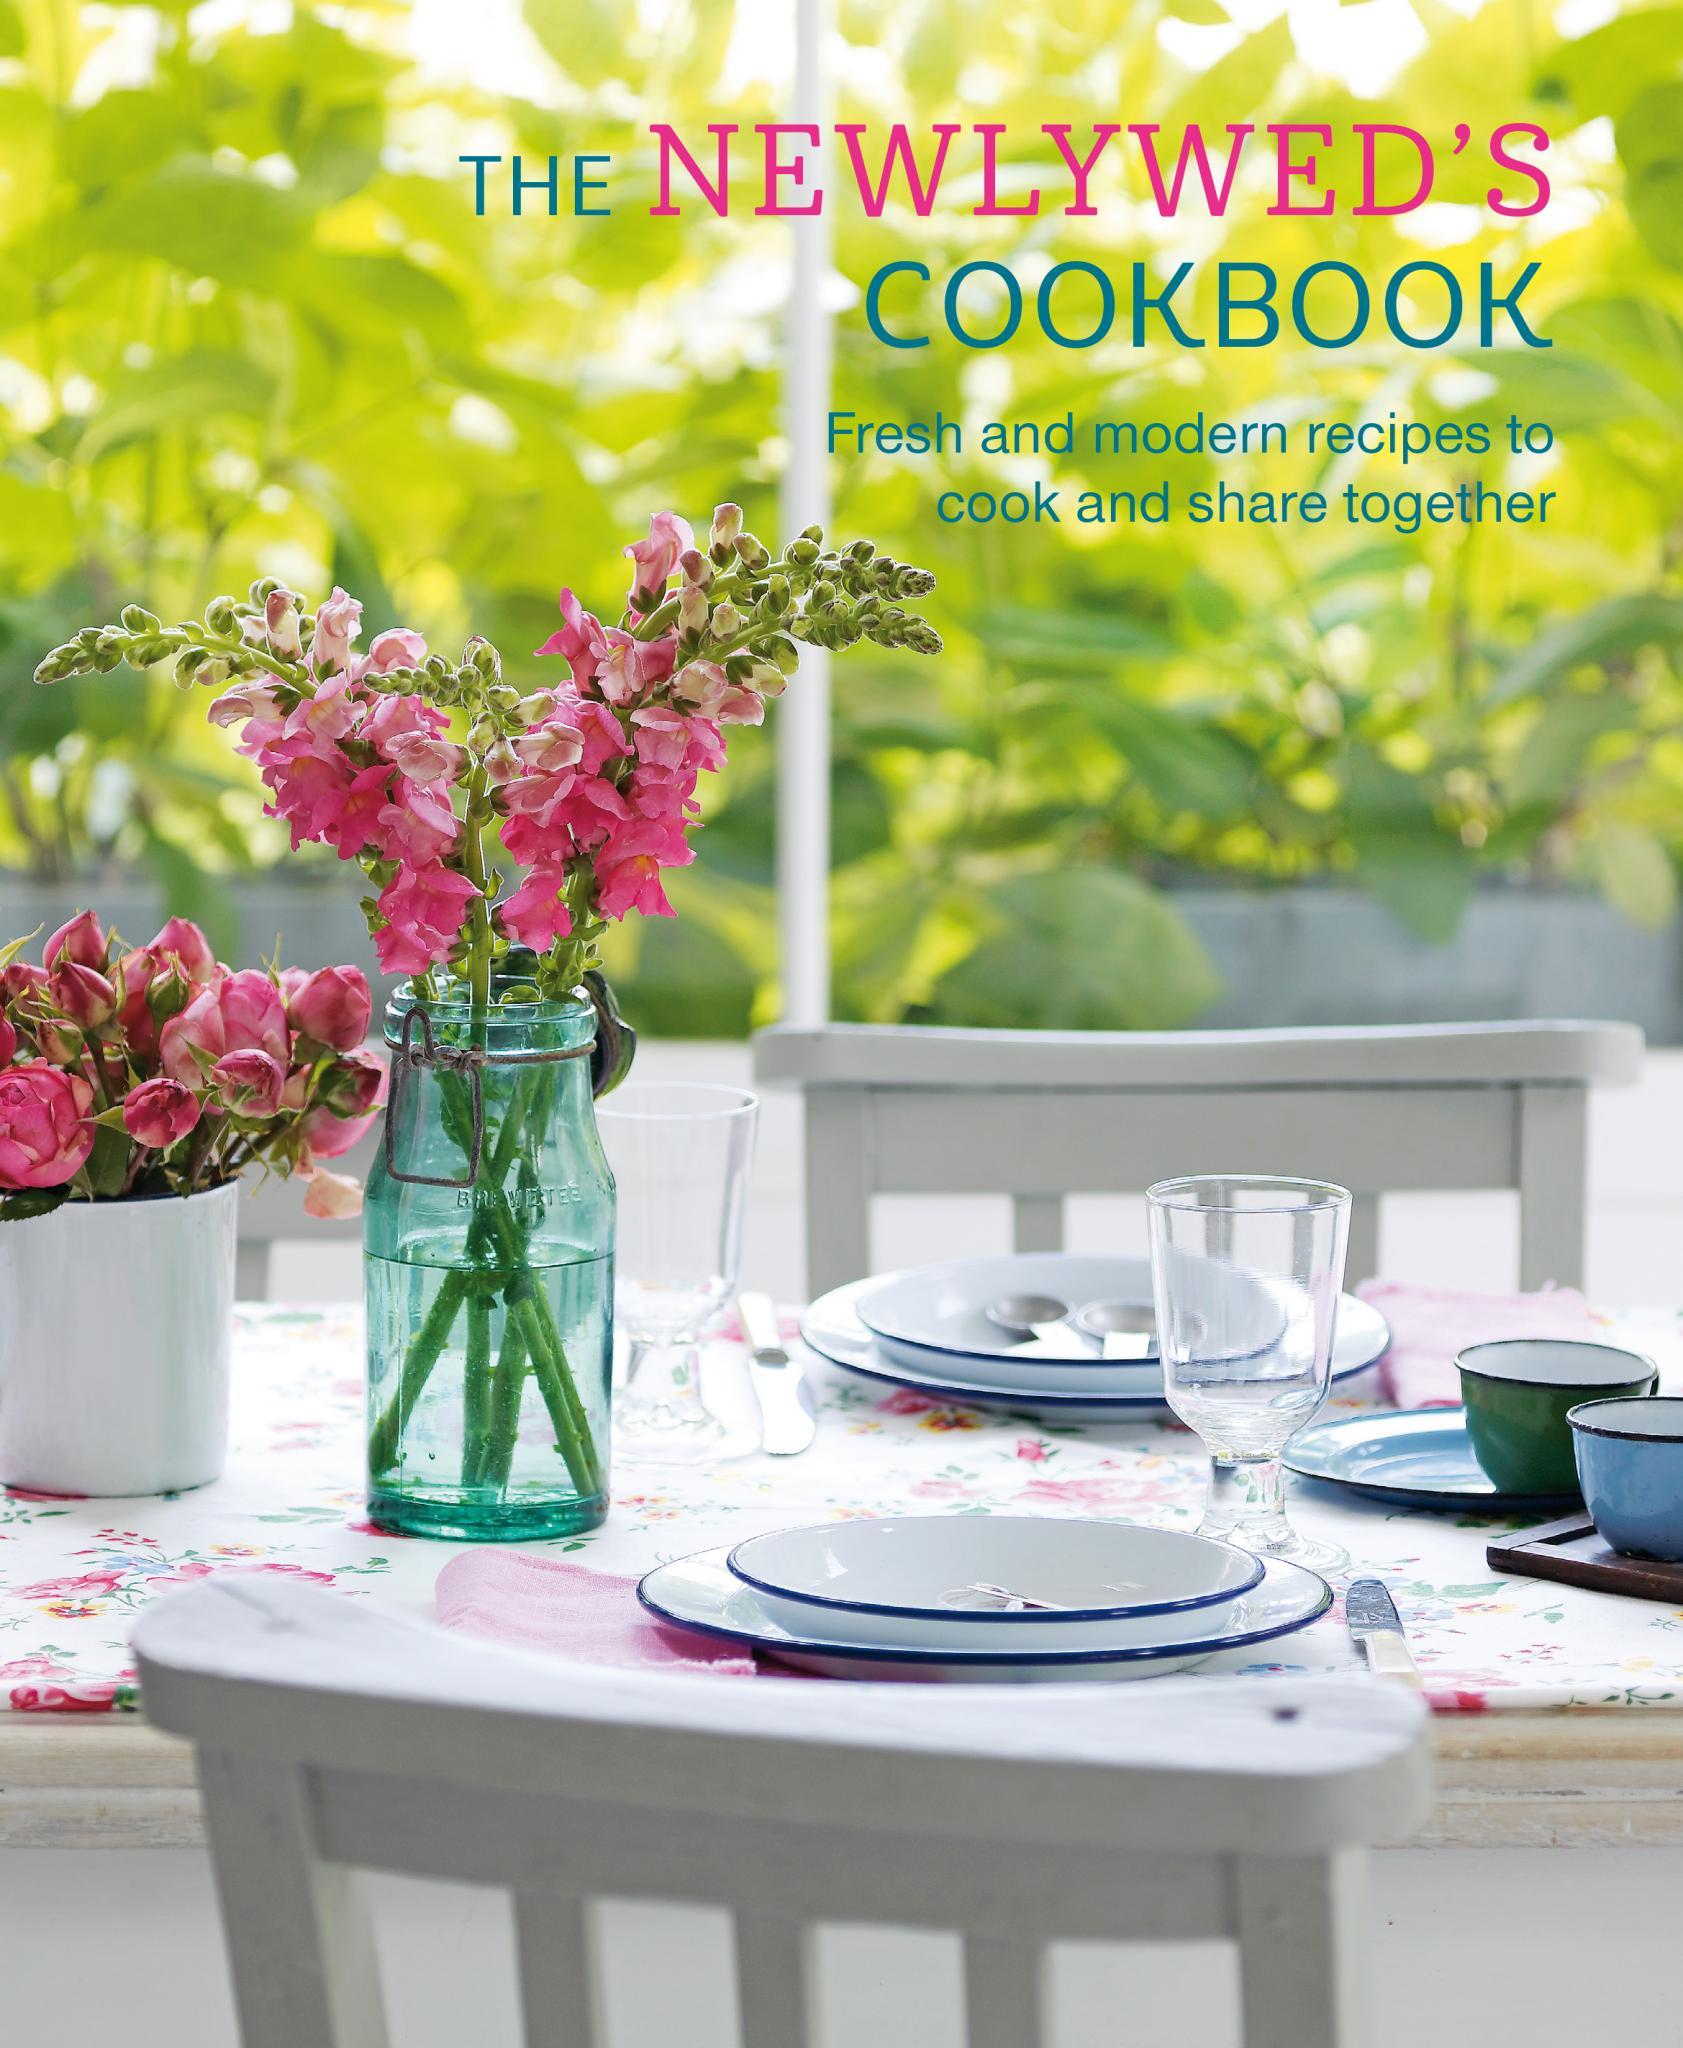 Newlyweds Cookbook